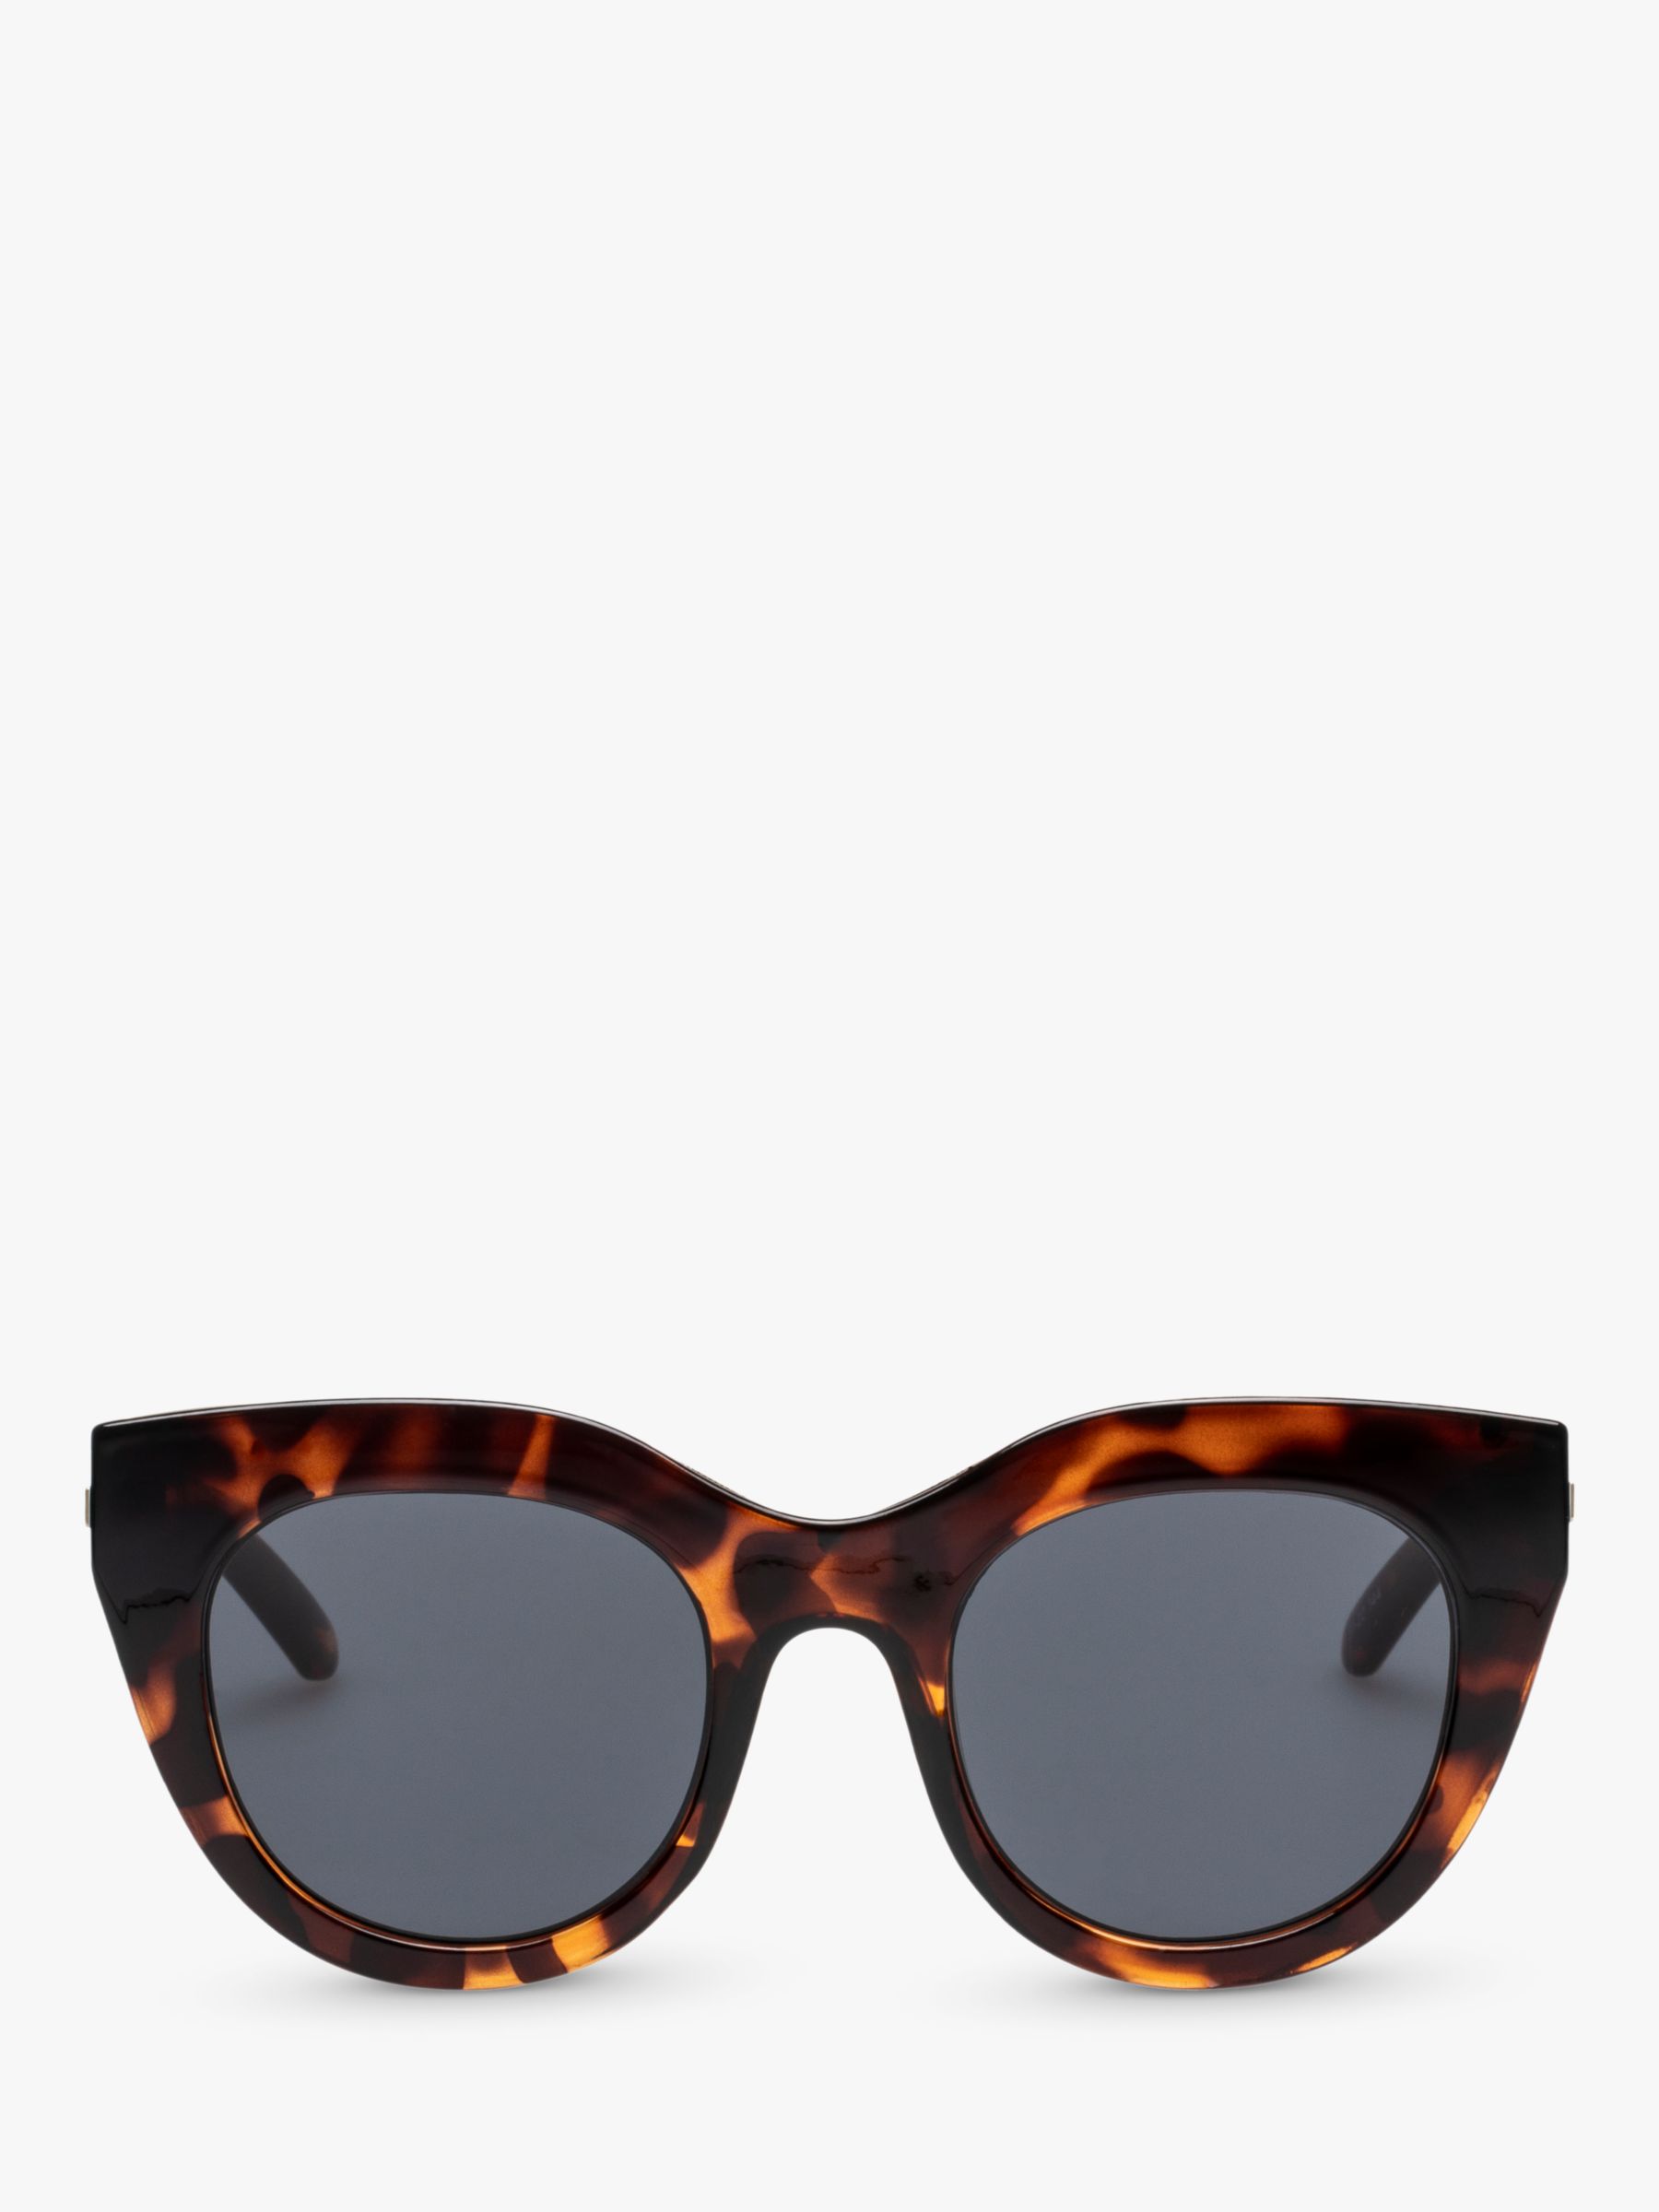 Le Specs Women's Air Heart Cat's Eye Sunglasses, Tortoise at John Lewis ...